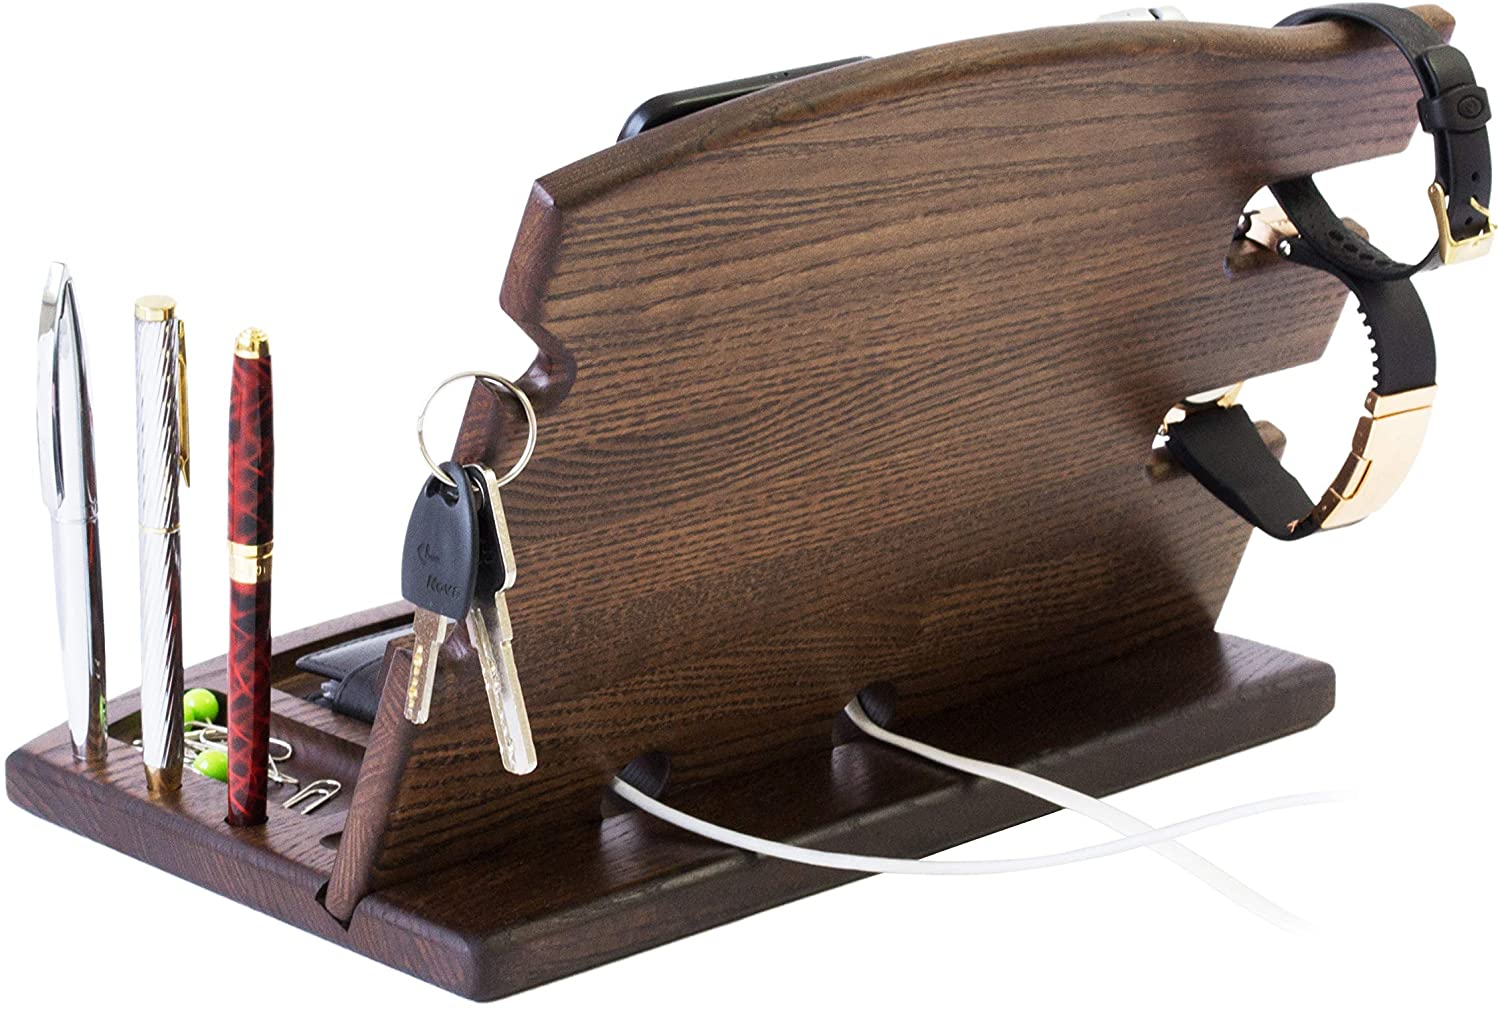 Wooden Crafted Phone Holders Australia = Wholesale wood Craft Phone Holder Desktop Organiser